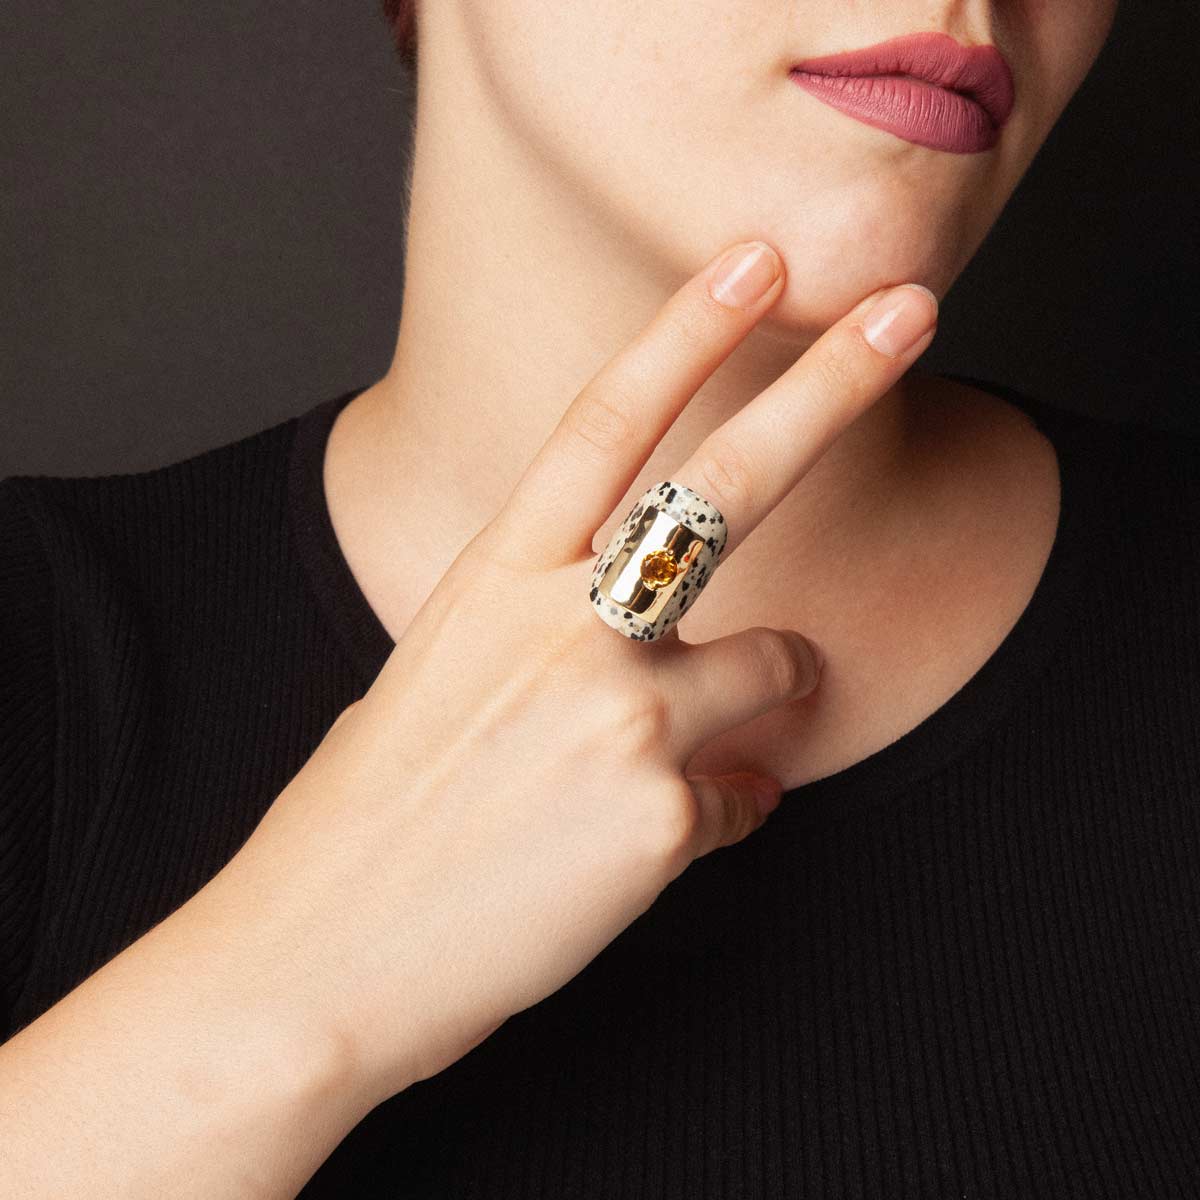 Aki handcrafted ring in 9k or 18k gold, sterling silver, Dalmatian jasper and citrine quartz designed by Belen Bajo